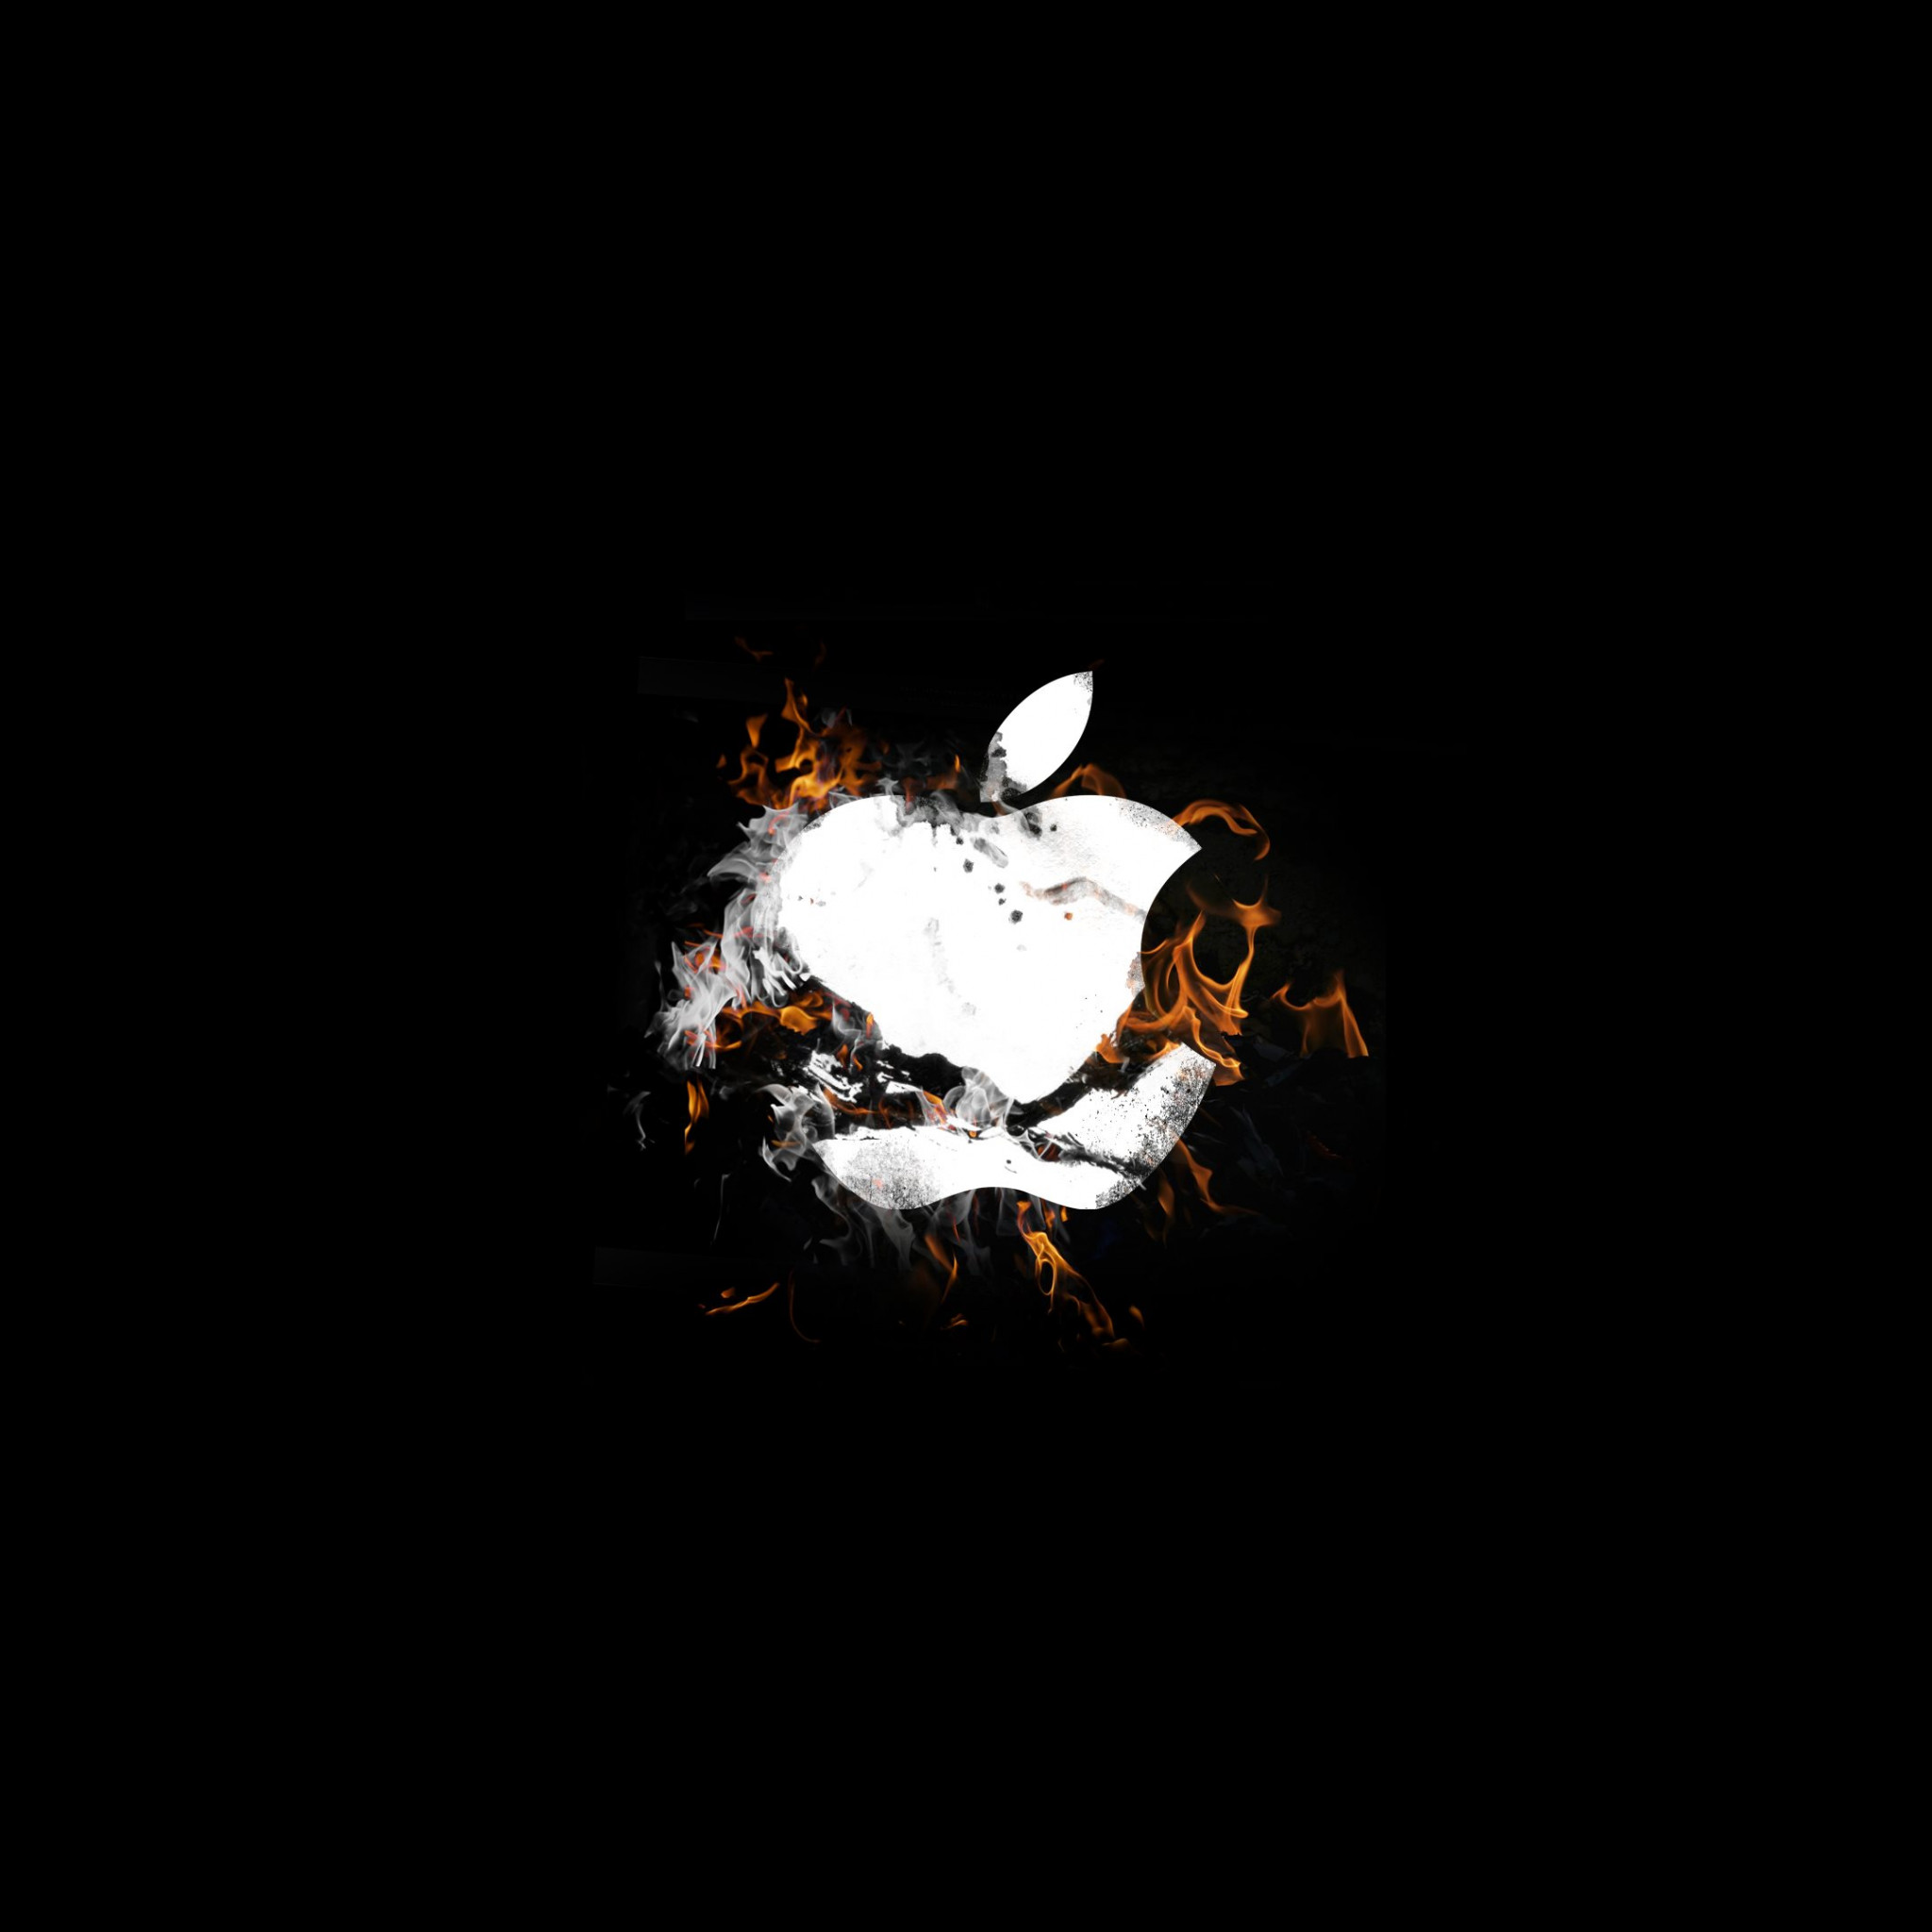 The Apple is on fire wallpaper 2048x2048